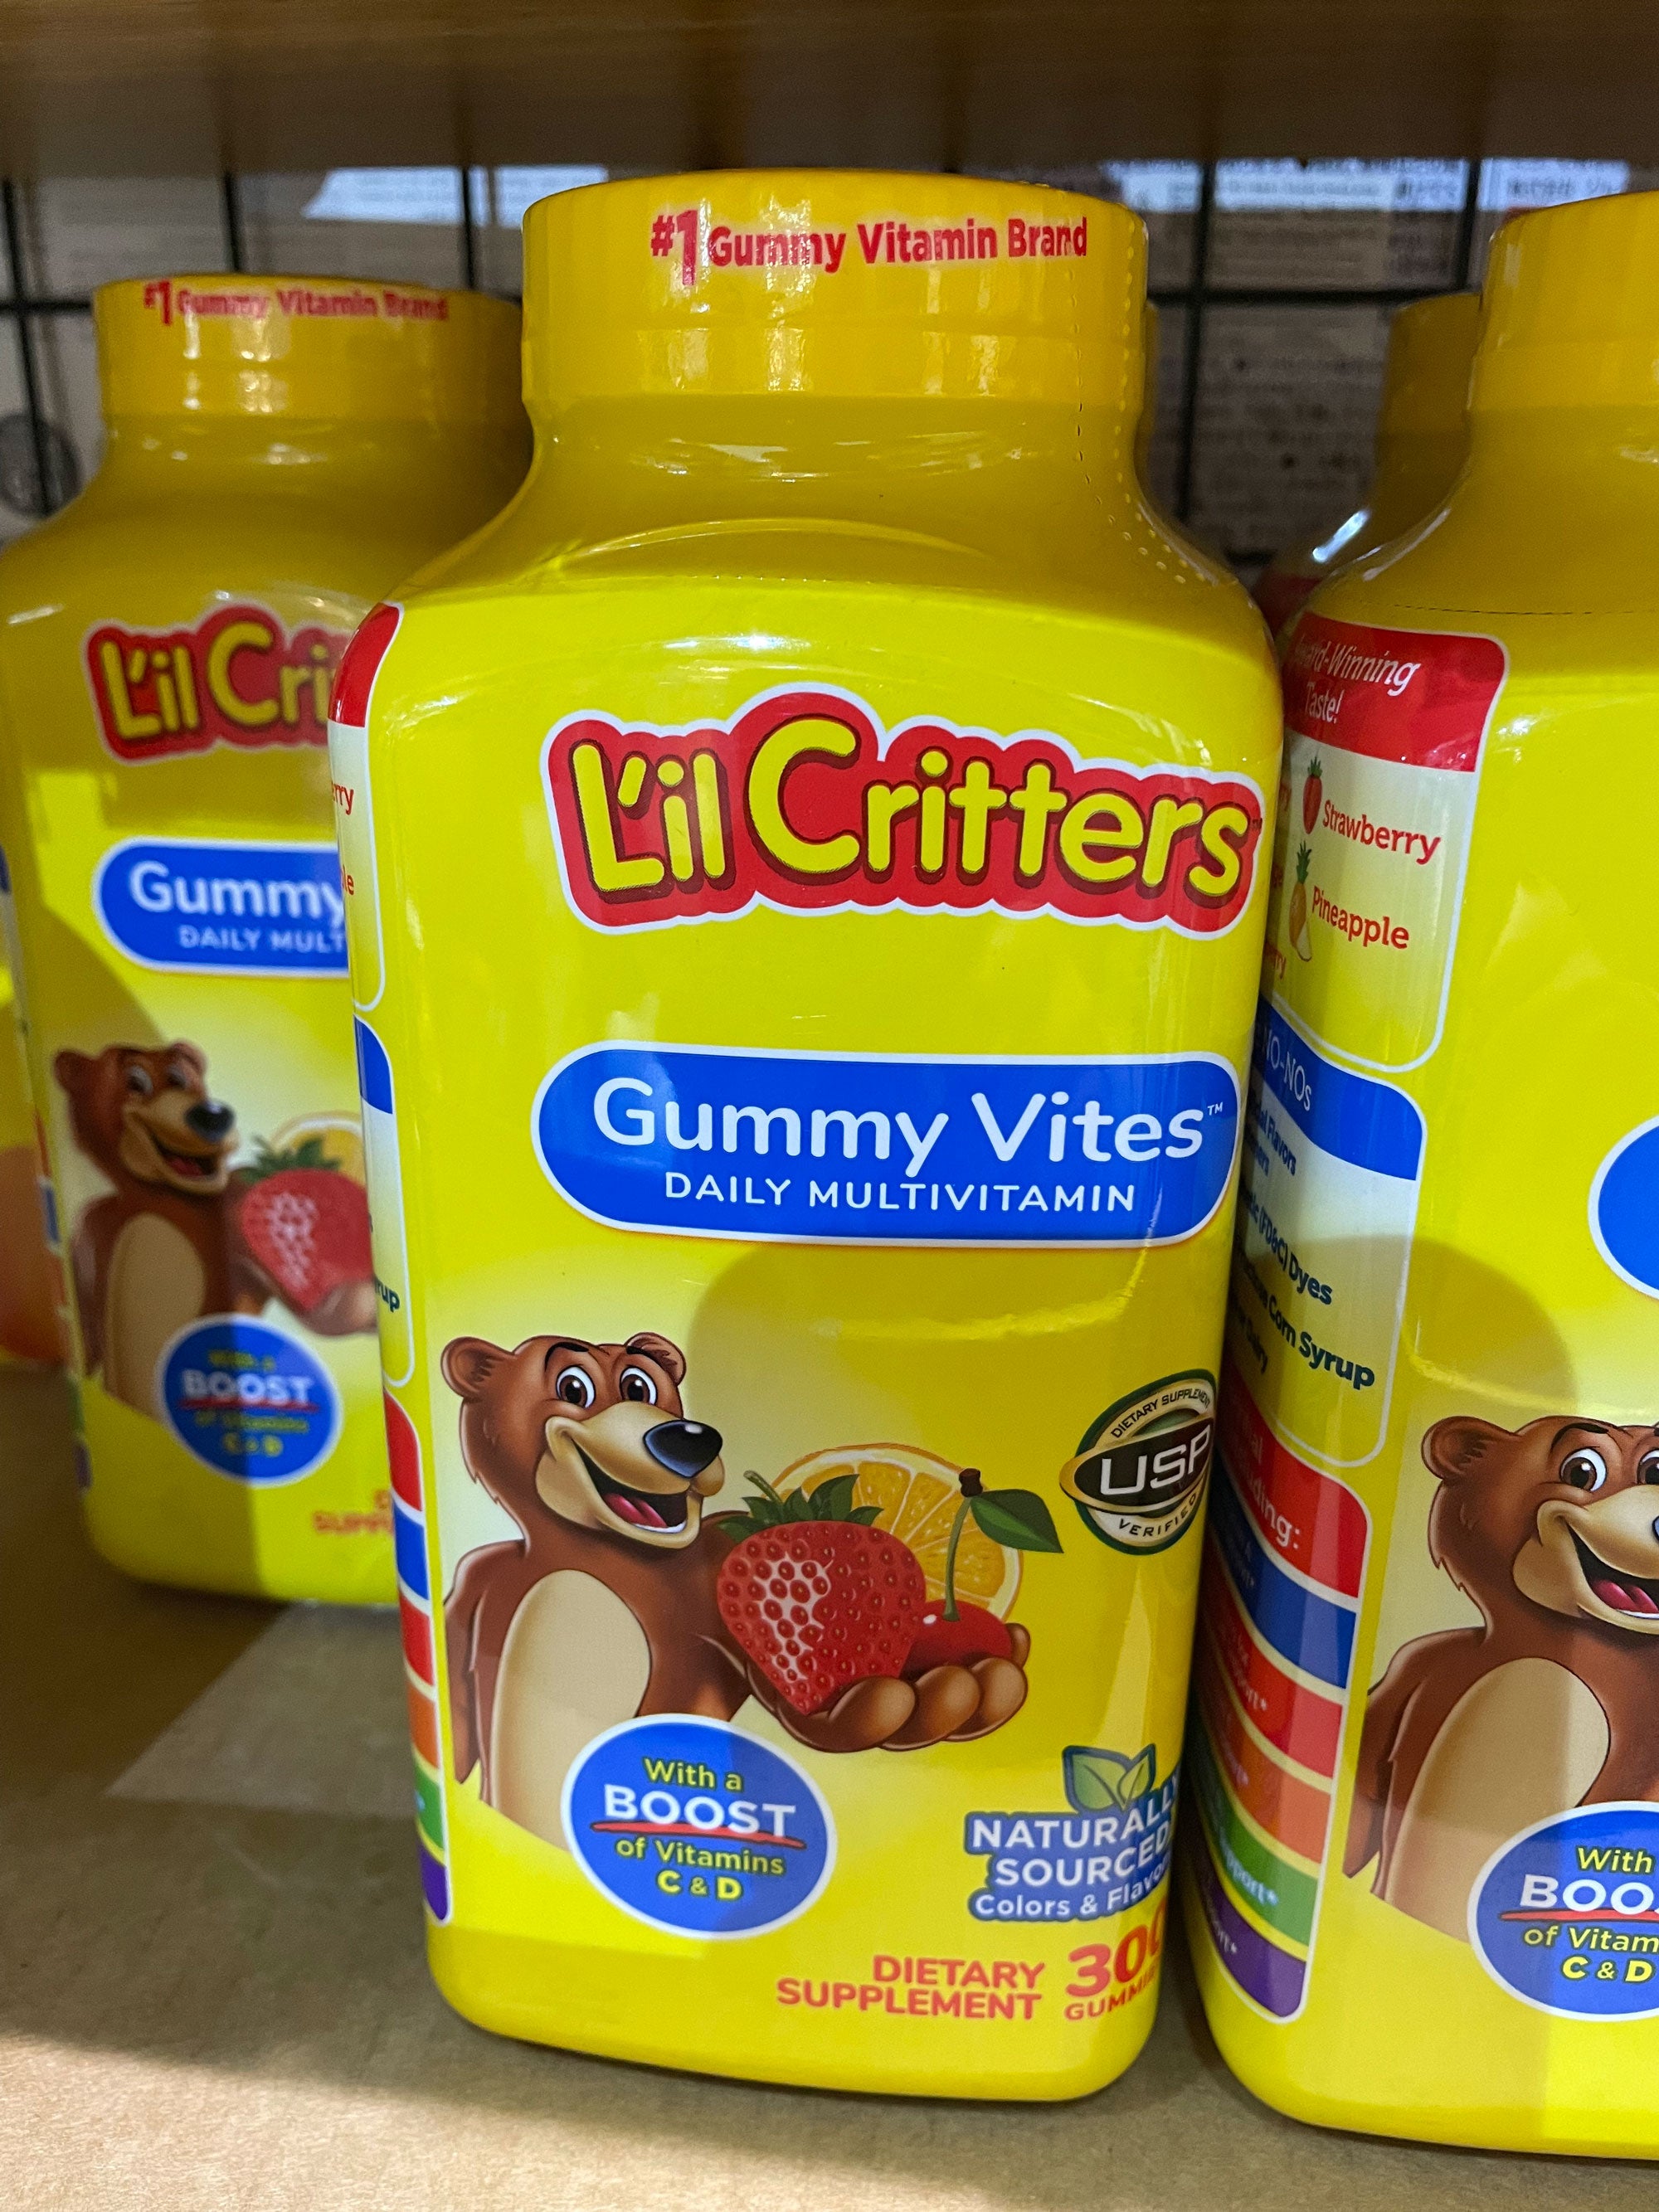 L'il Critters Gummy Vites Multivitamin Daily Gummy Bears 300 Gummies